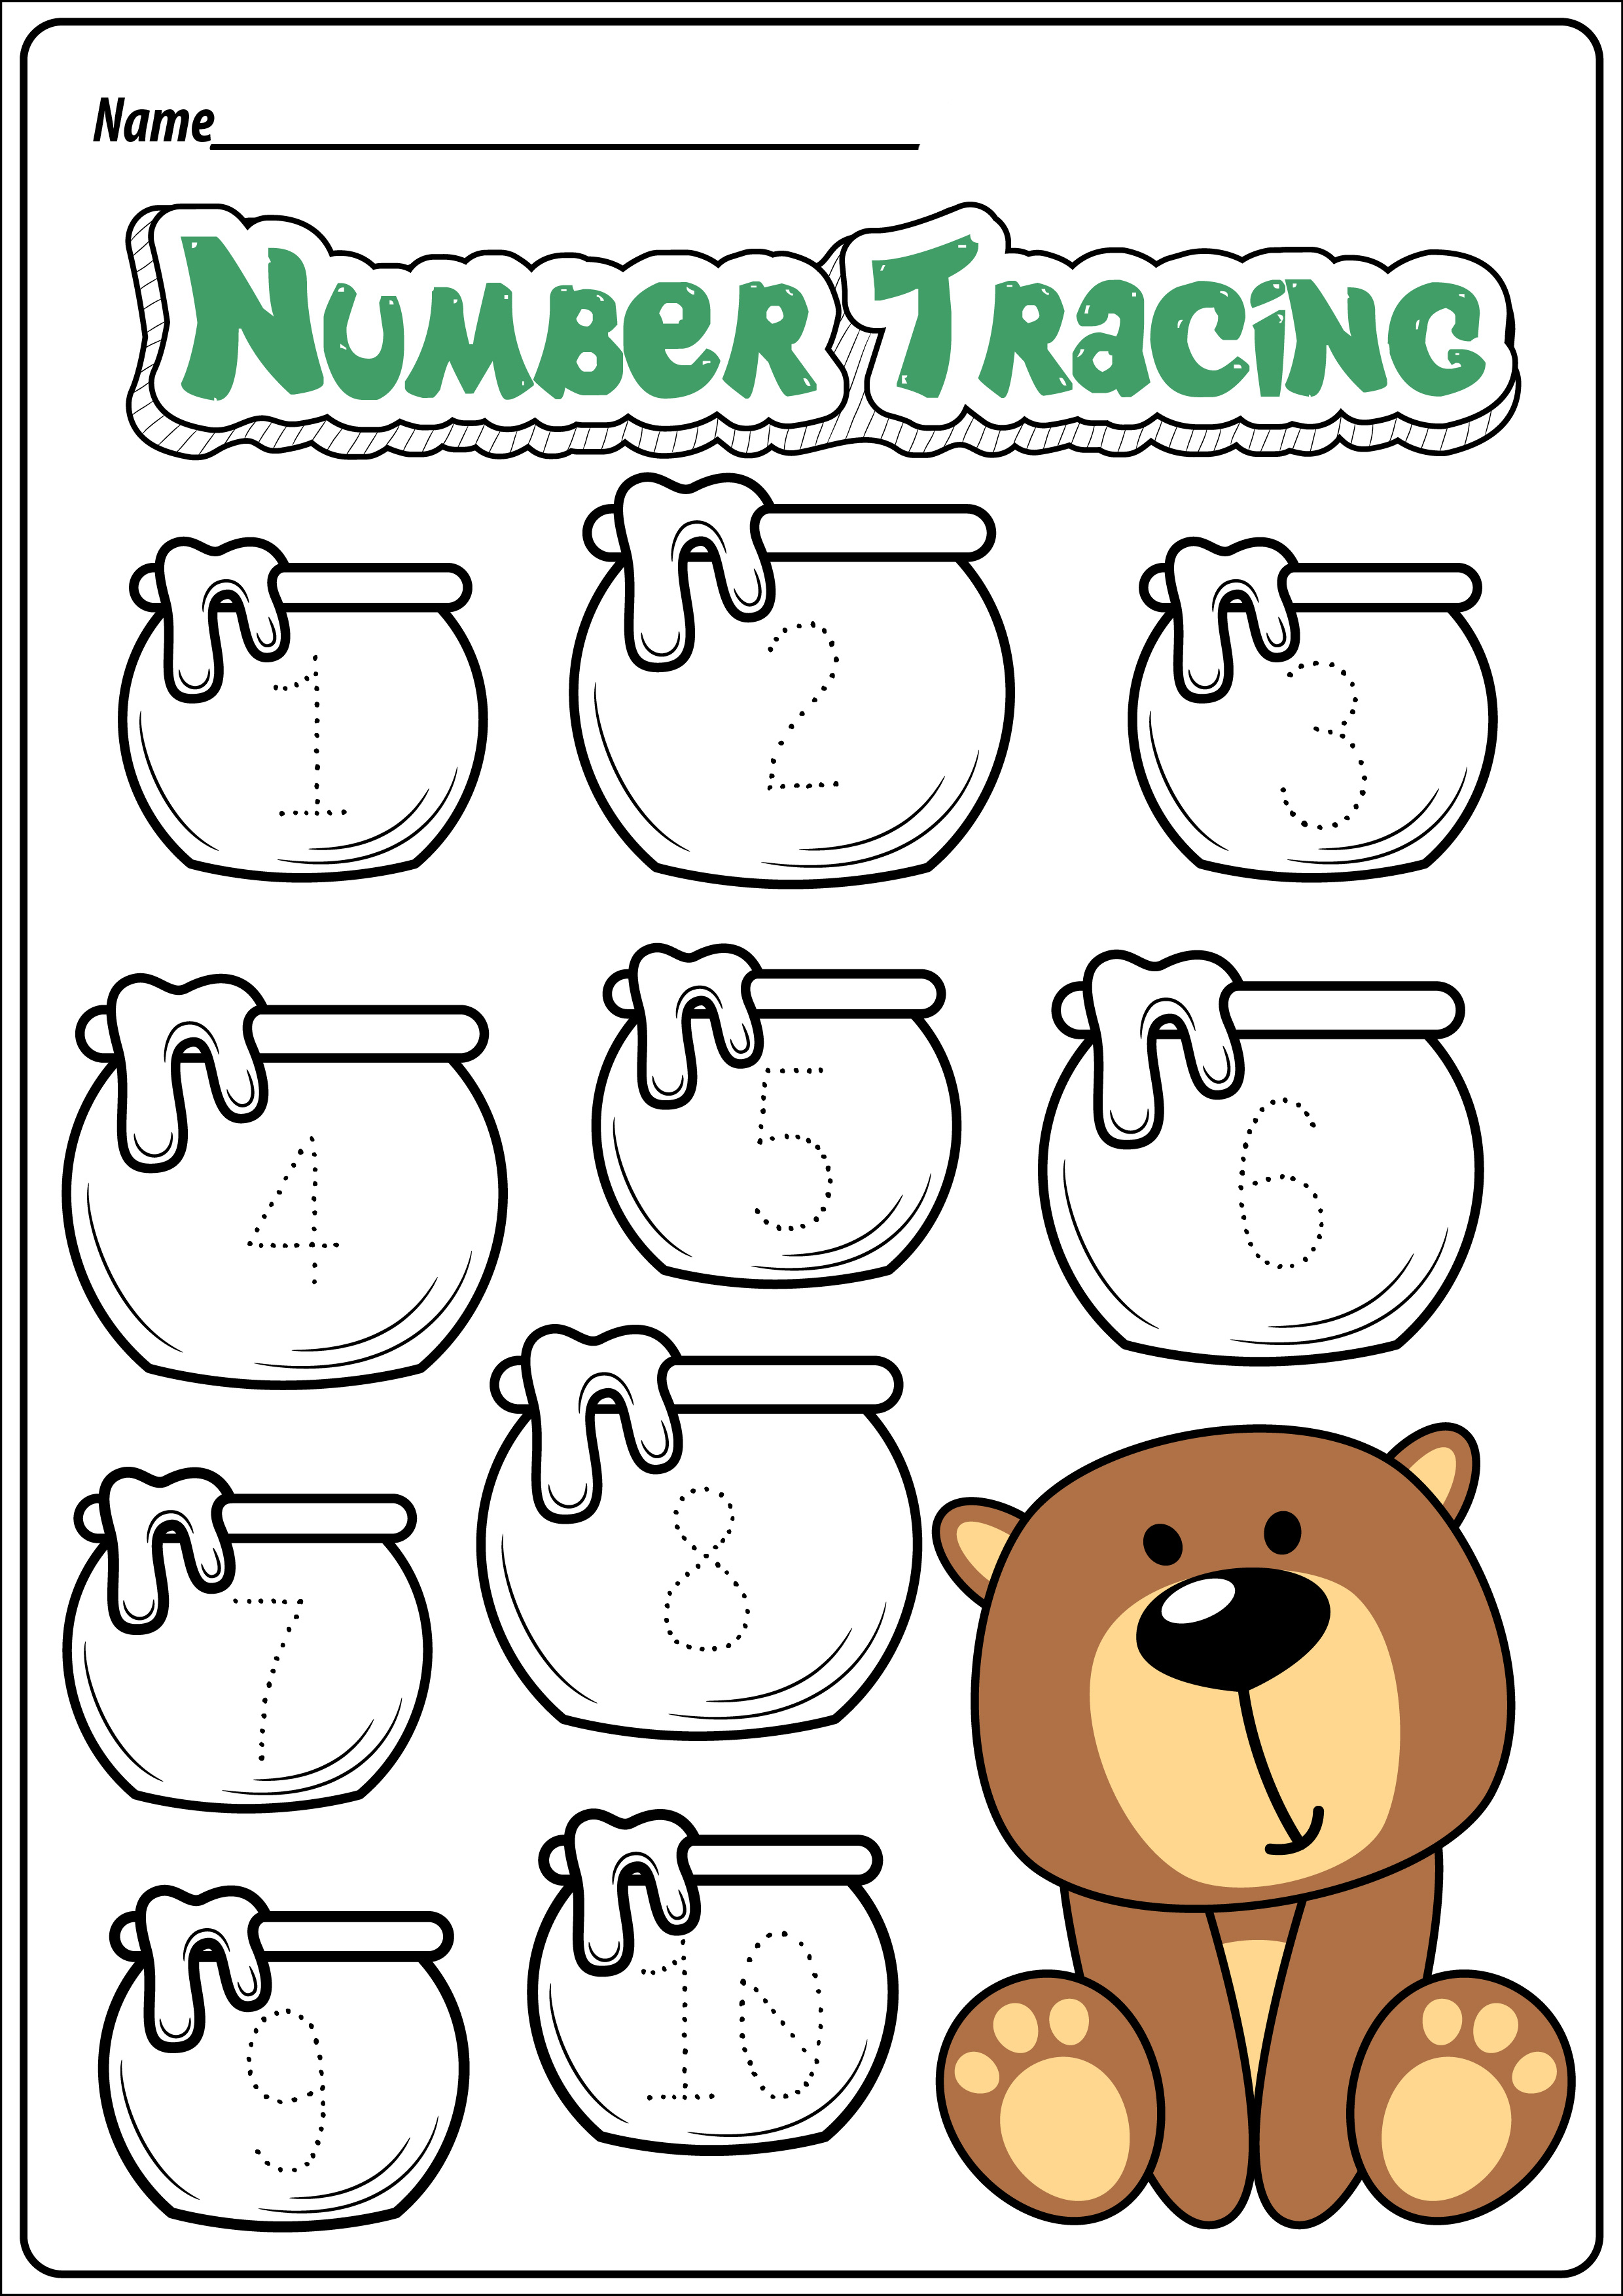 Free Printable Counting Bears Worksheets